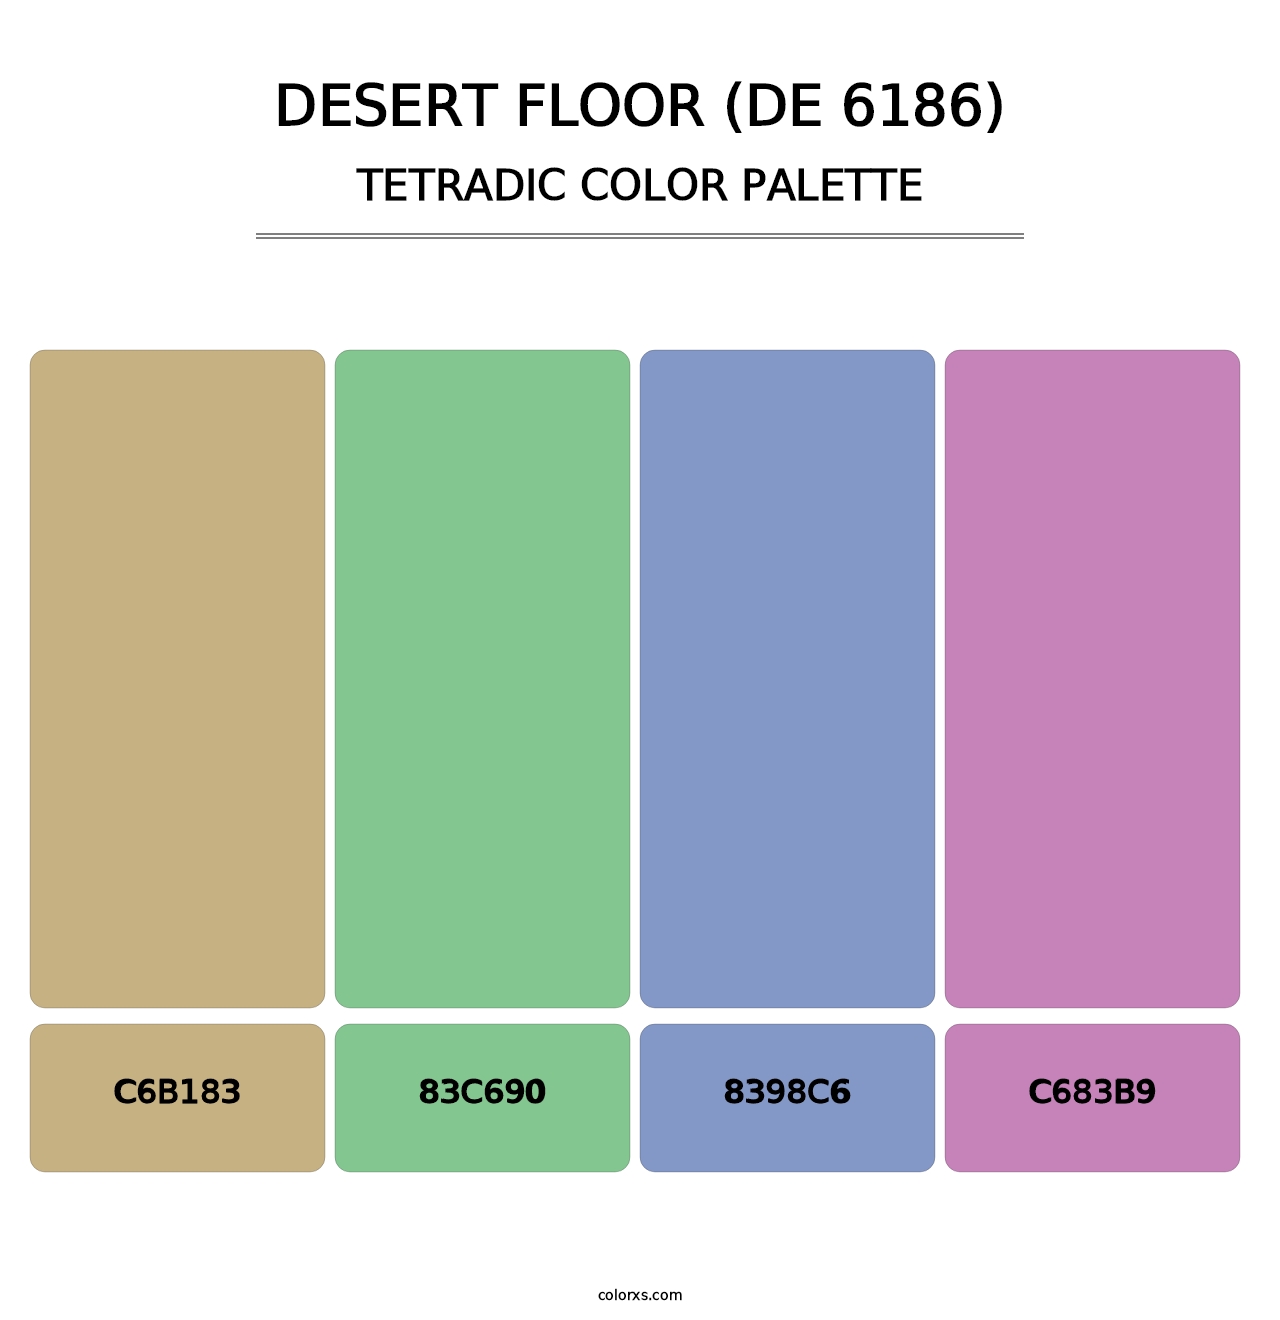 Desert Floor (DE 6186) - Tetradic Color Palette